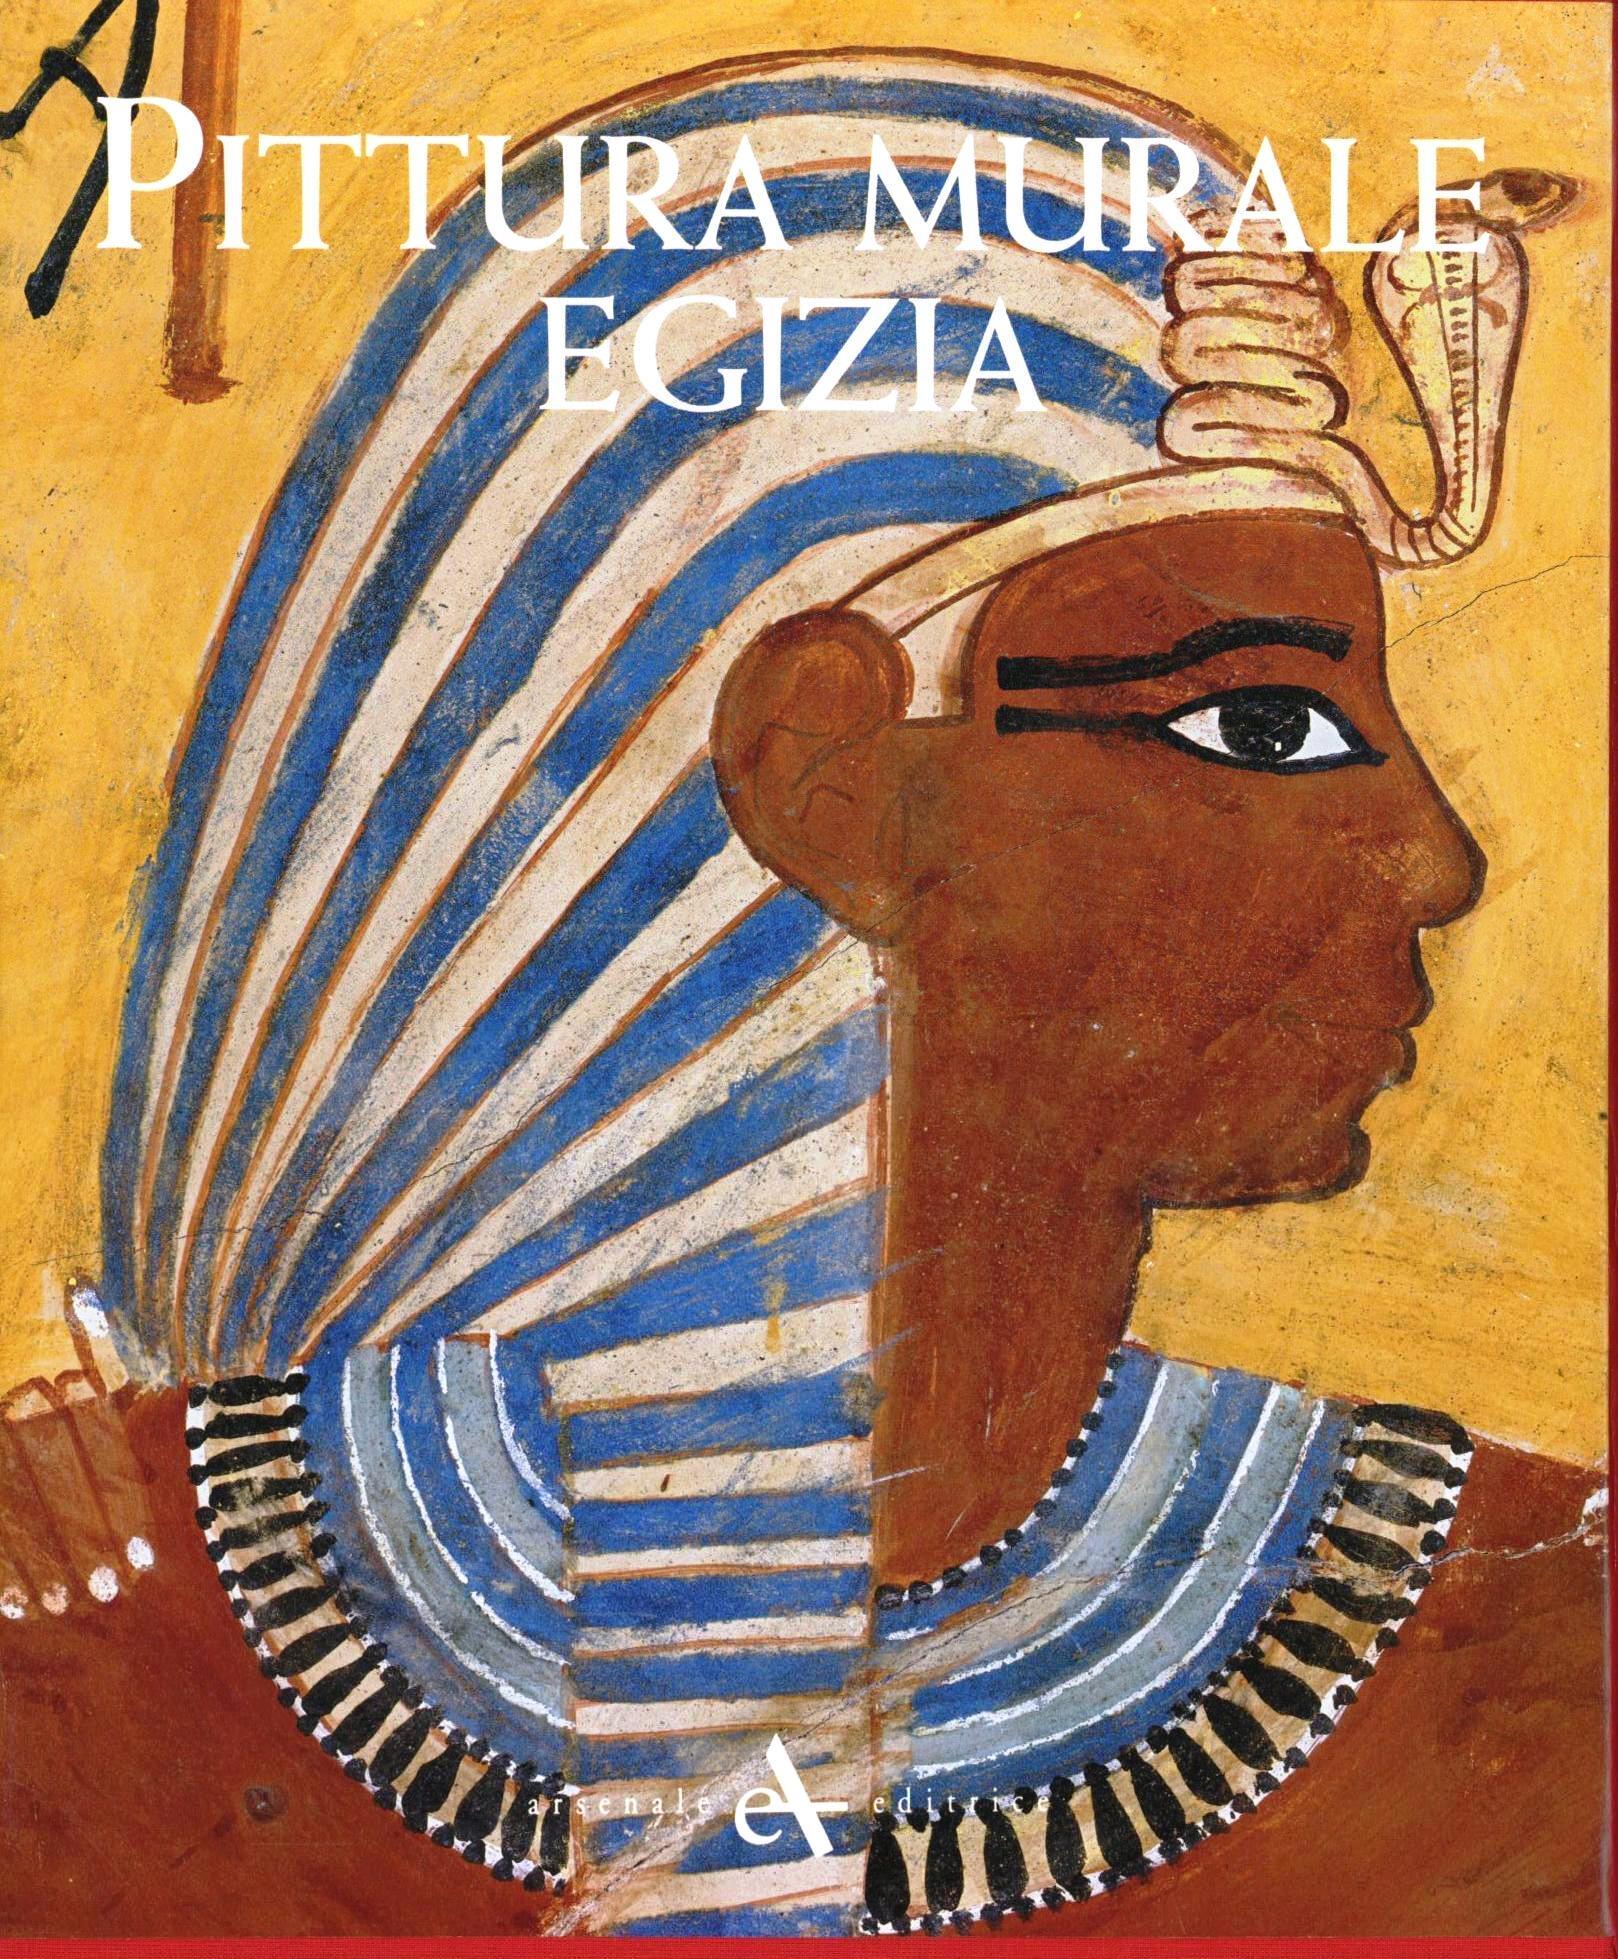 Pittura murale egizia - Francesco Tiradritti - Libro ...